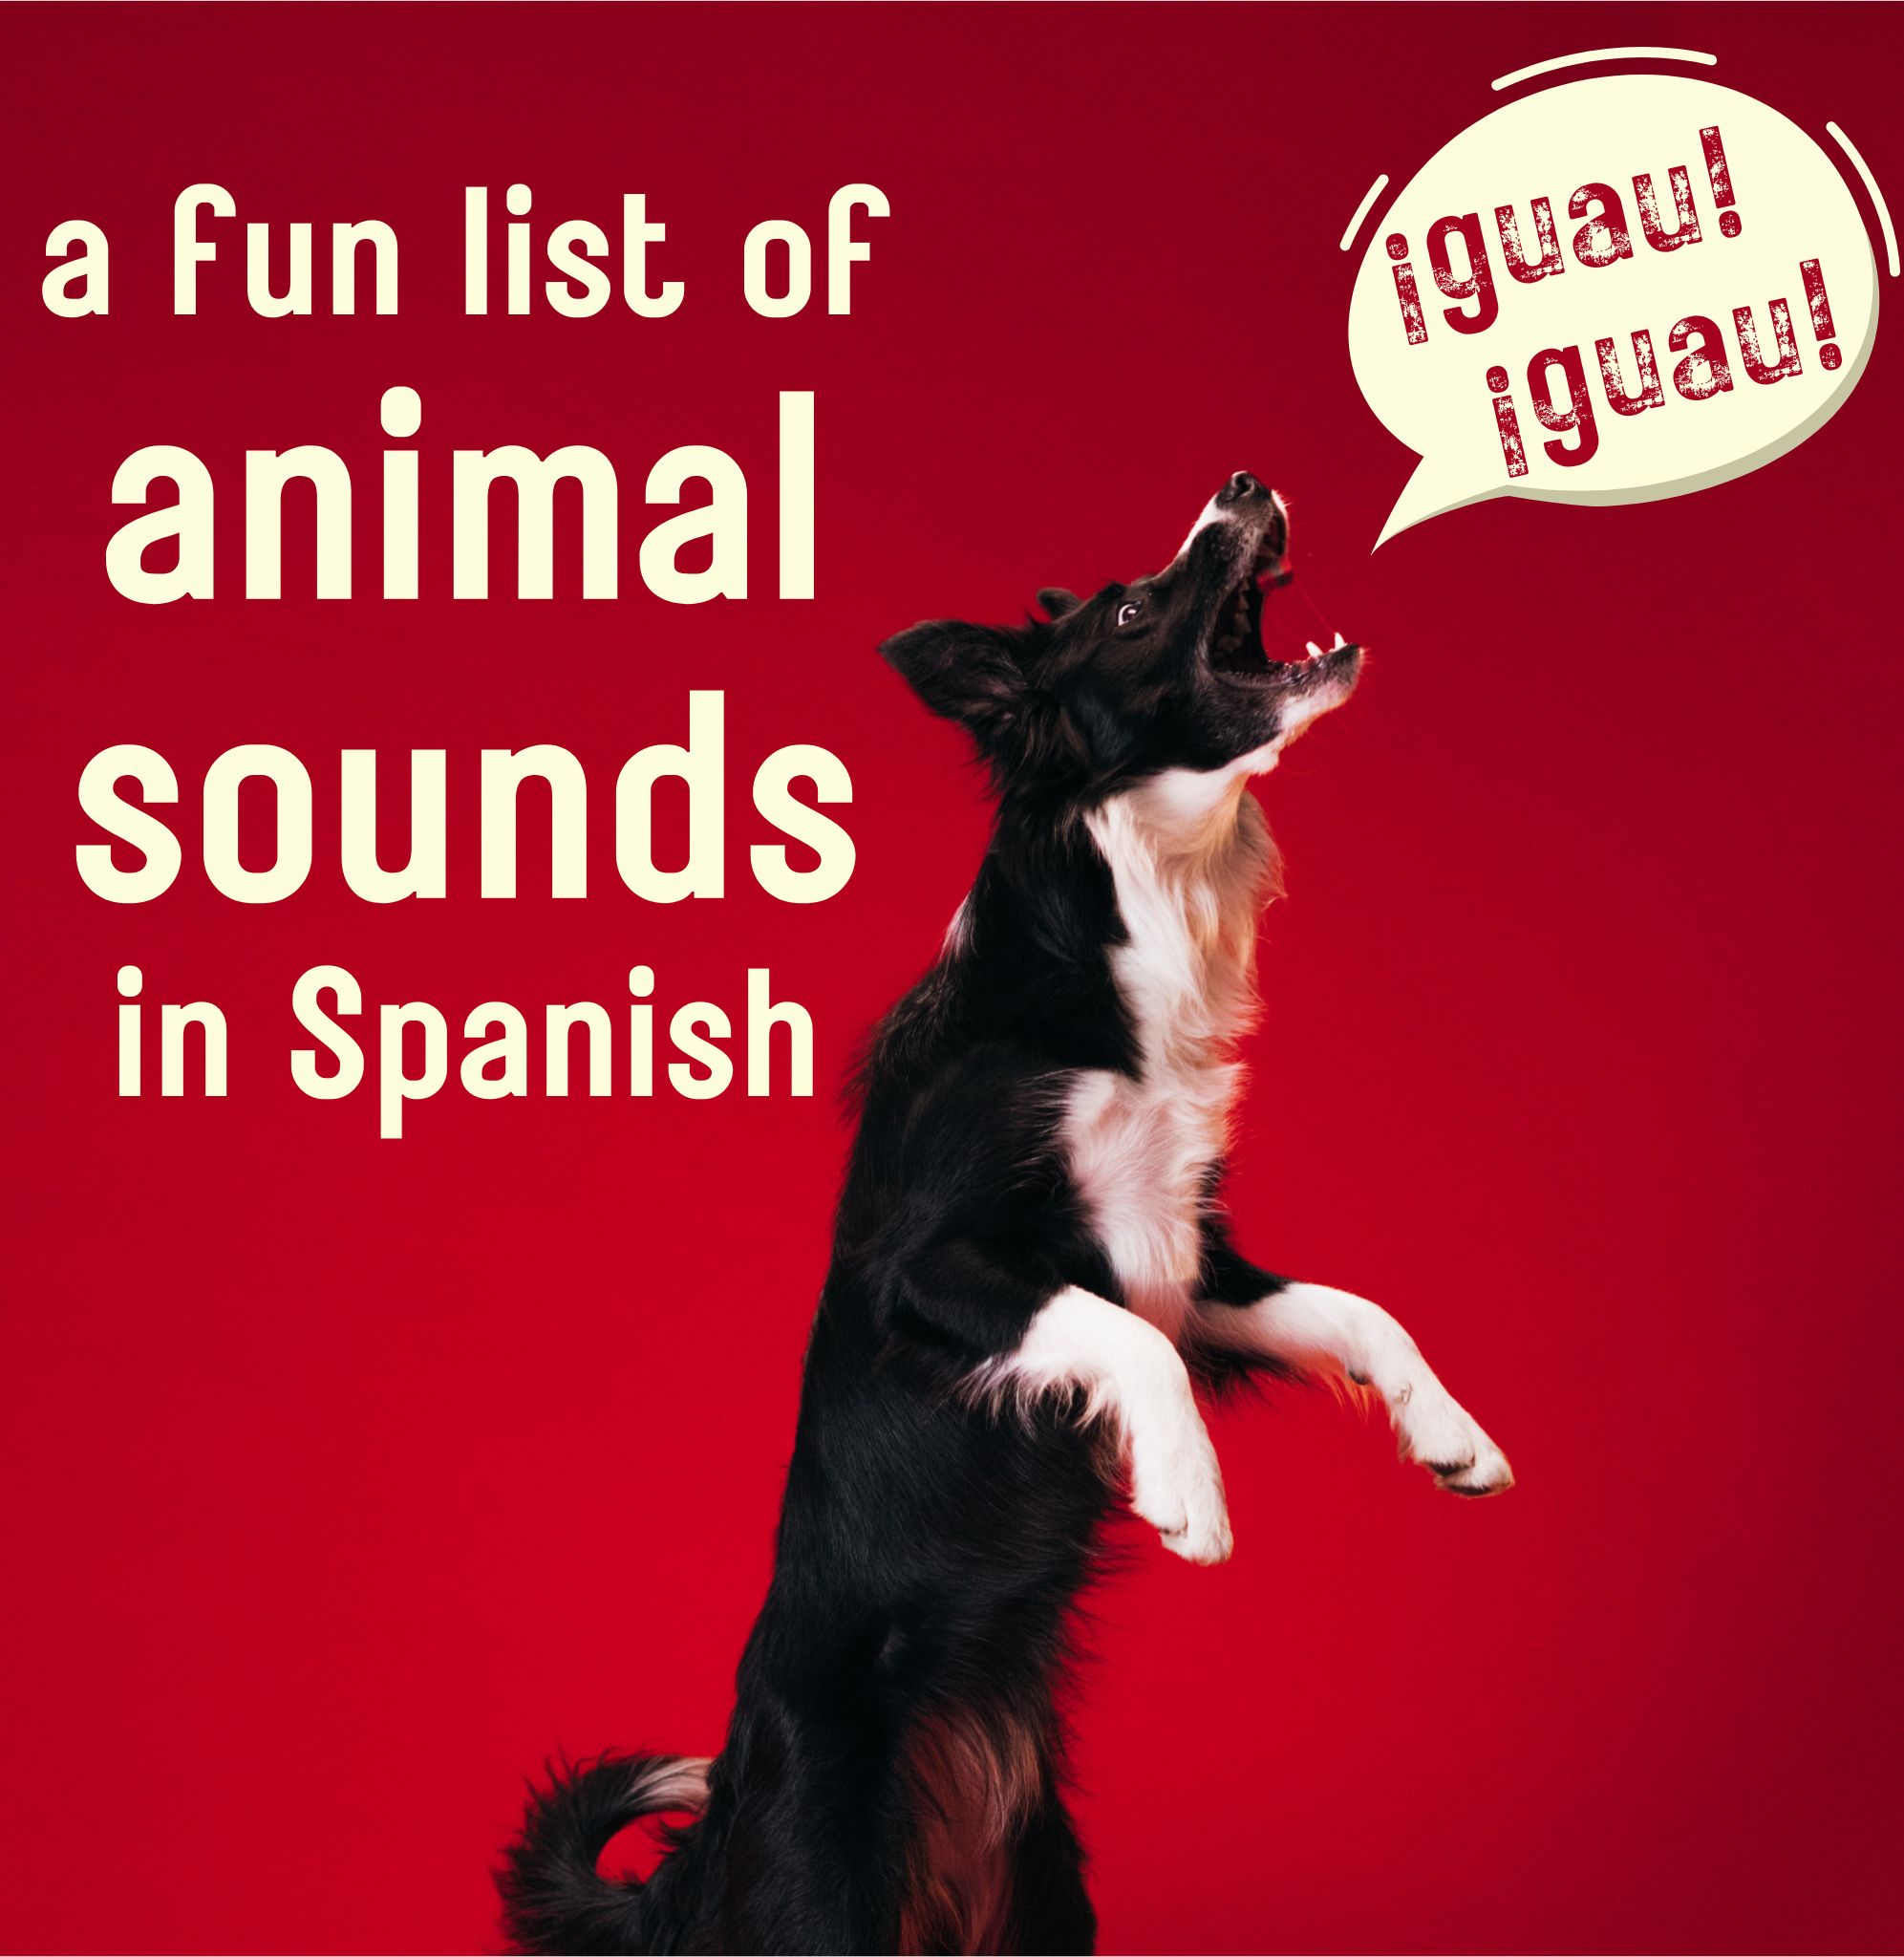 Animal sounds in Spanish